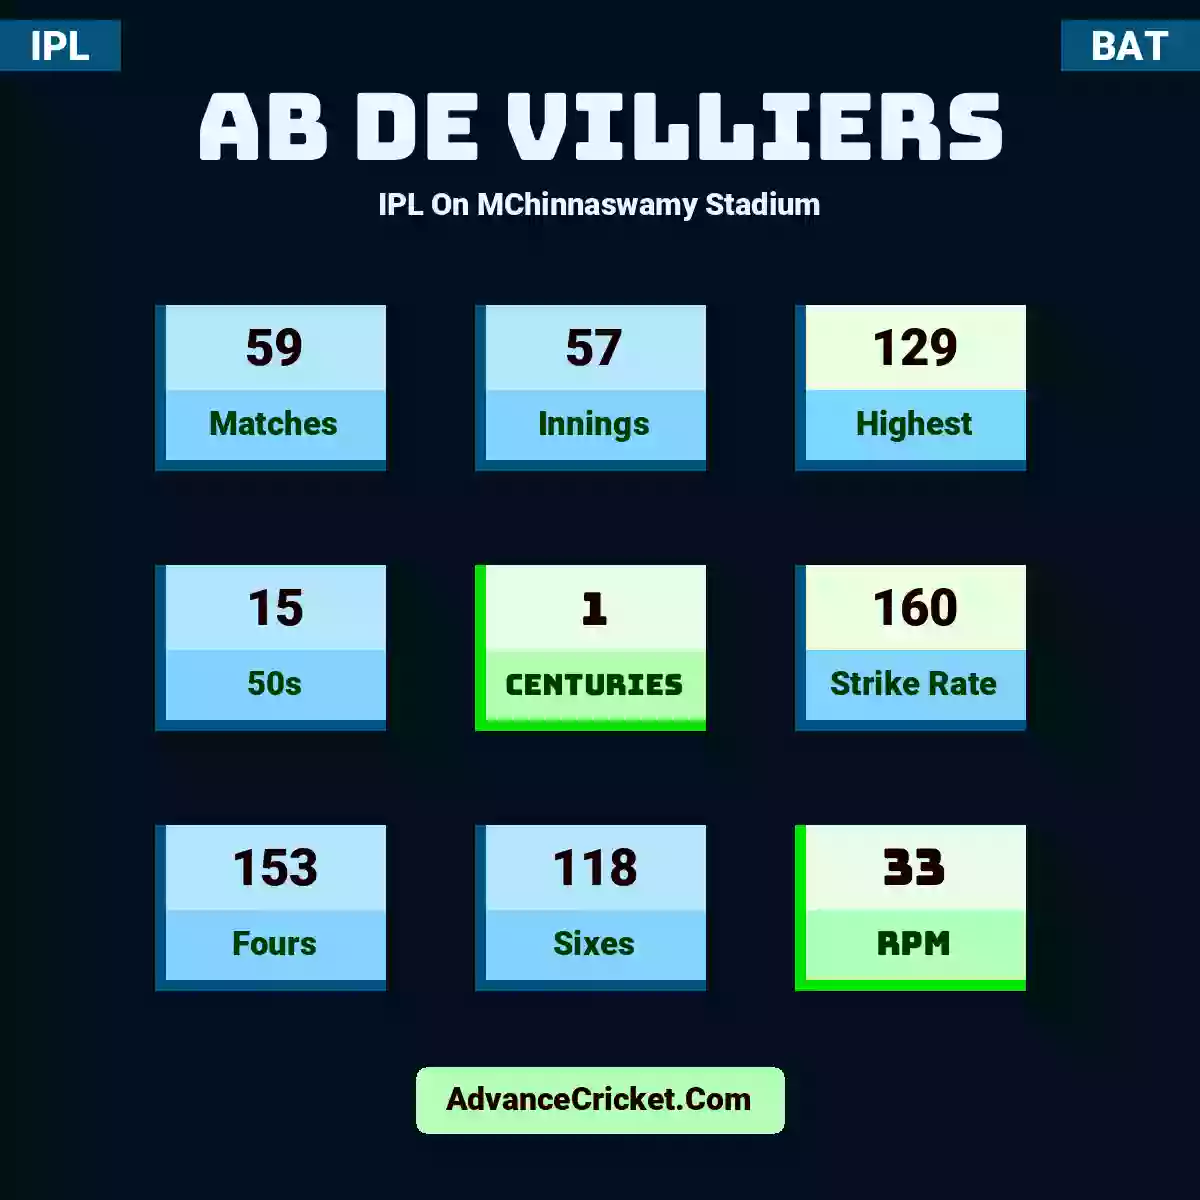 AB de Villiers IPL  On MChinnaswamy Stadium, AB de Villiers played 59 matches, scored 129 runs as highest, 15 half-centuries, and 1 centuries, with a strike rate of 160. A.Villiers hit 153 fours and 118 sixes, with an RPM of 33.